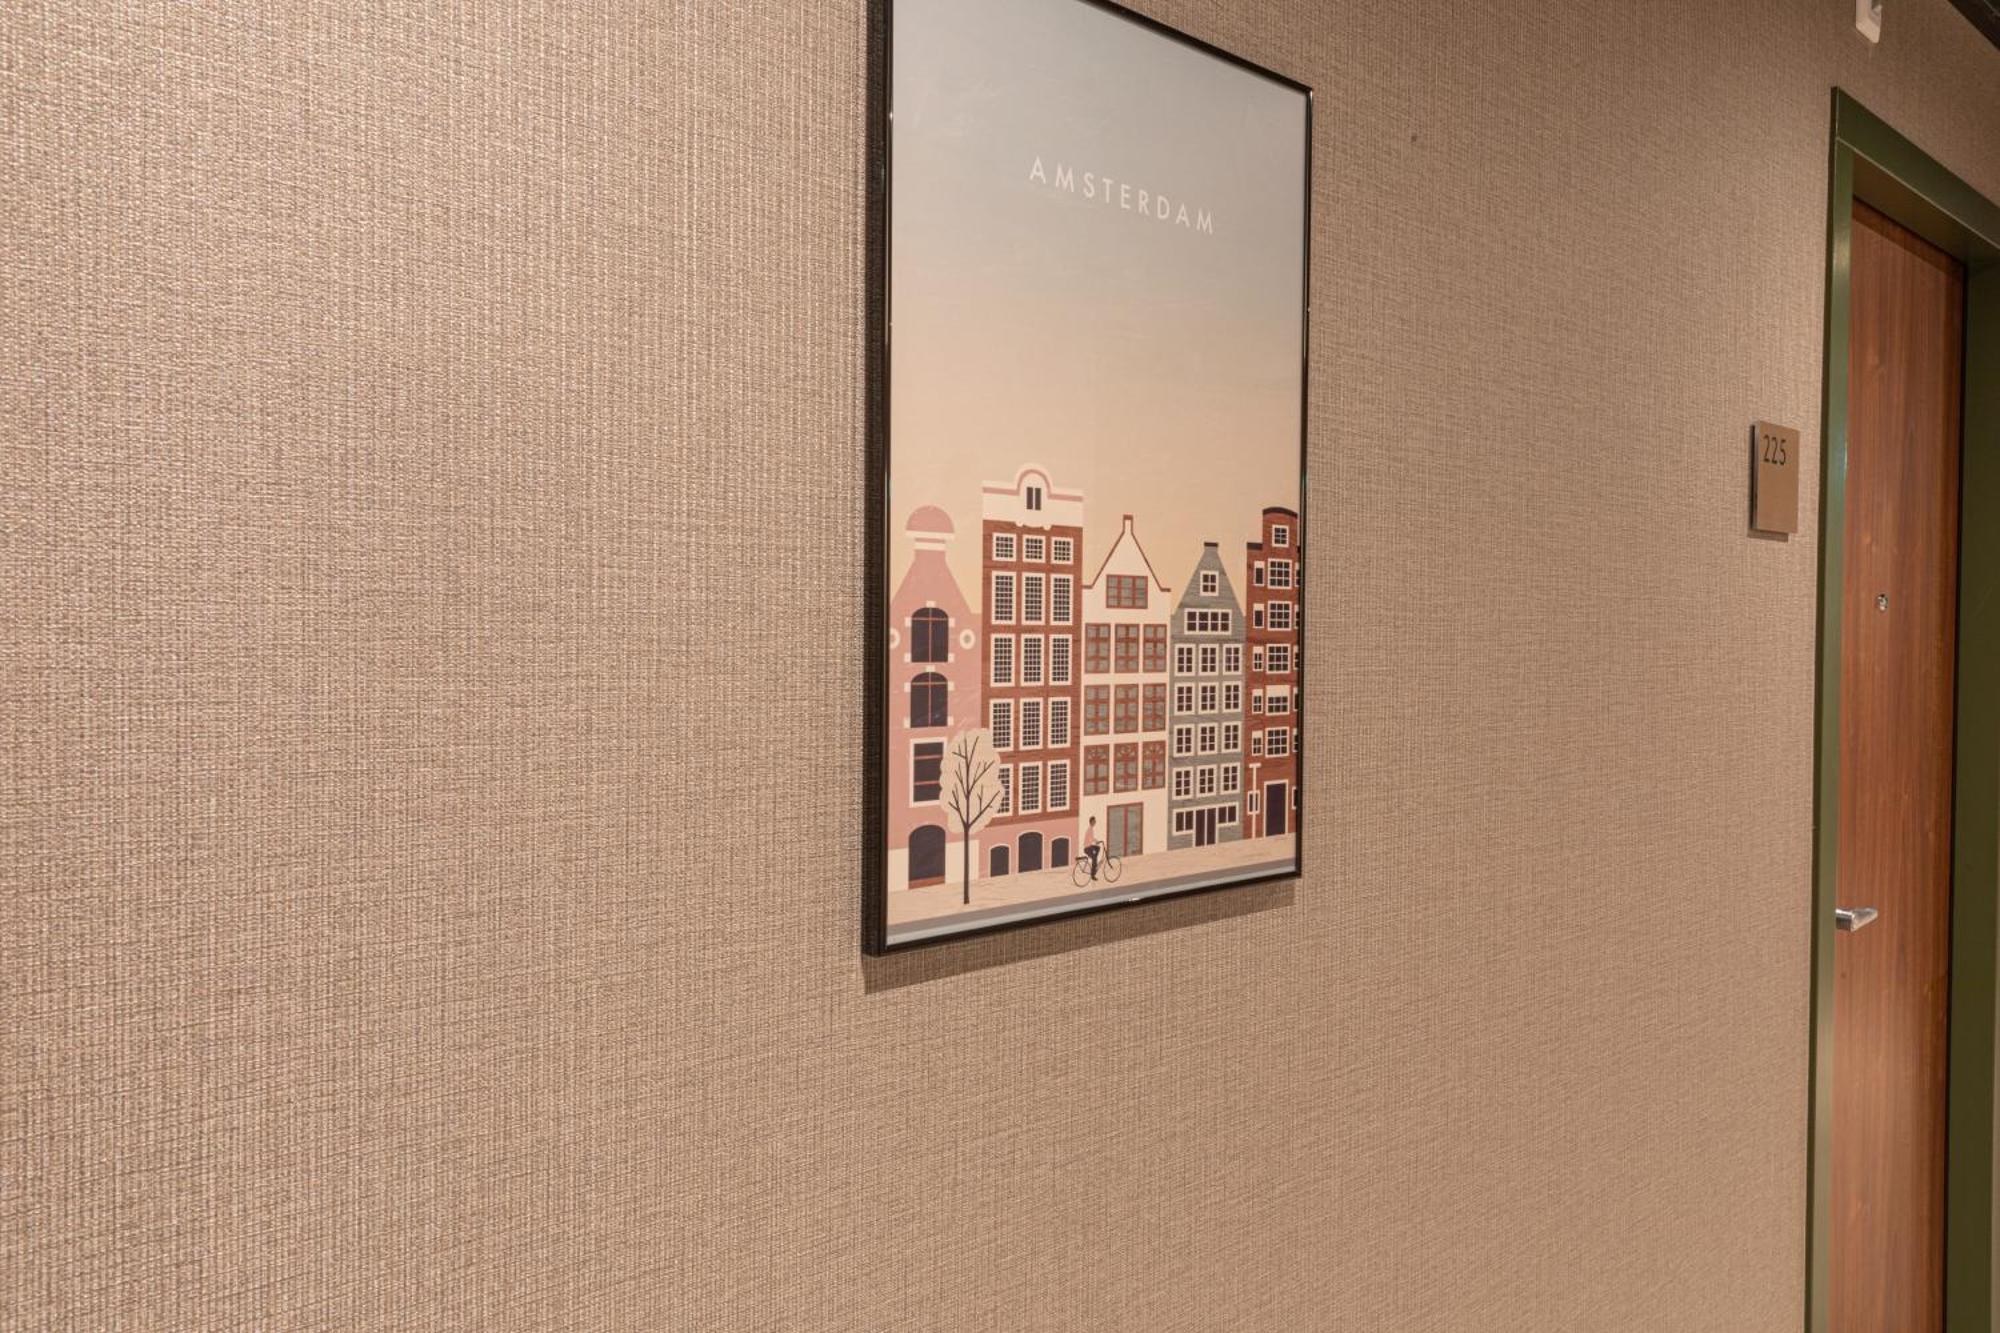 Distrikt Hotels Amsterdam זנדאם מראה חיצוני תמונה